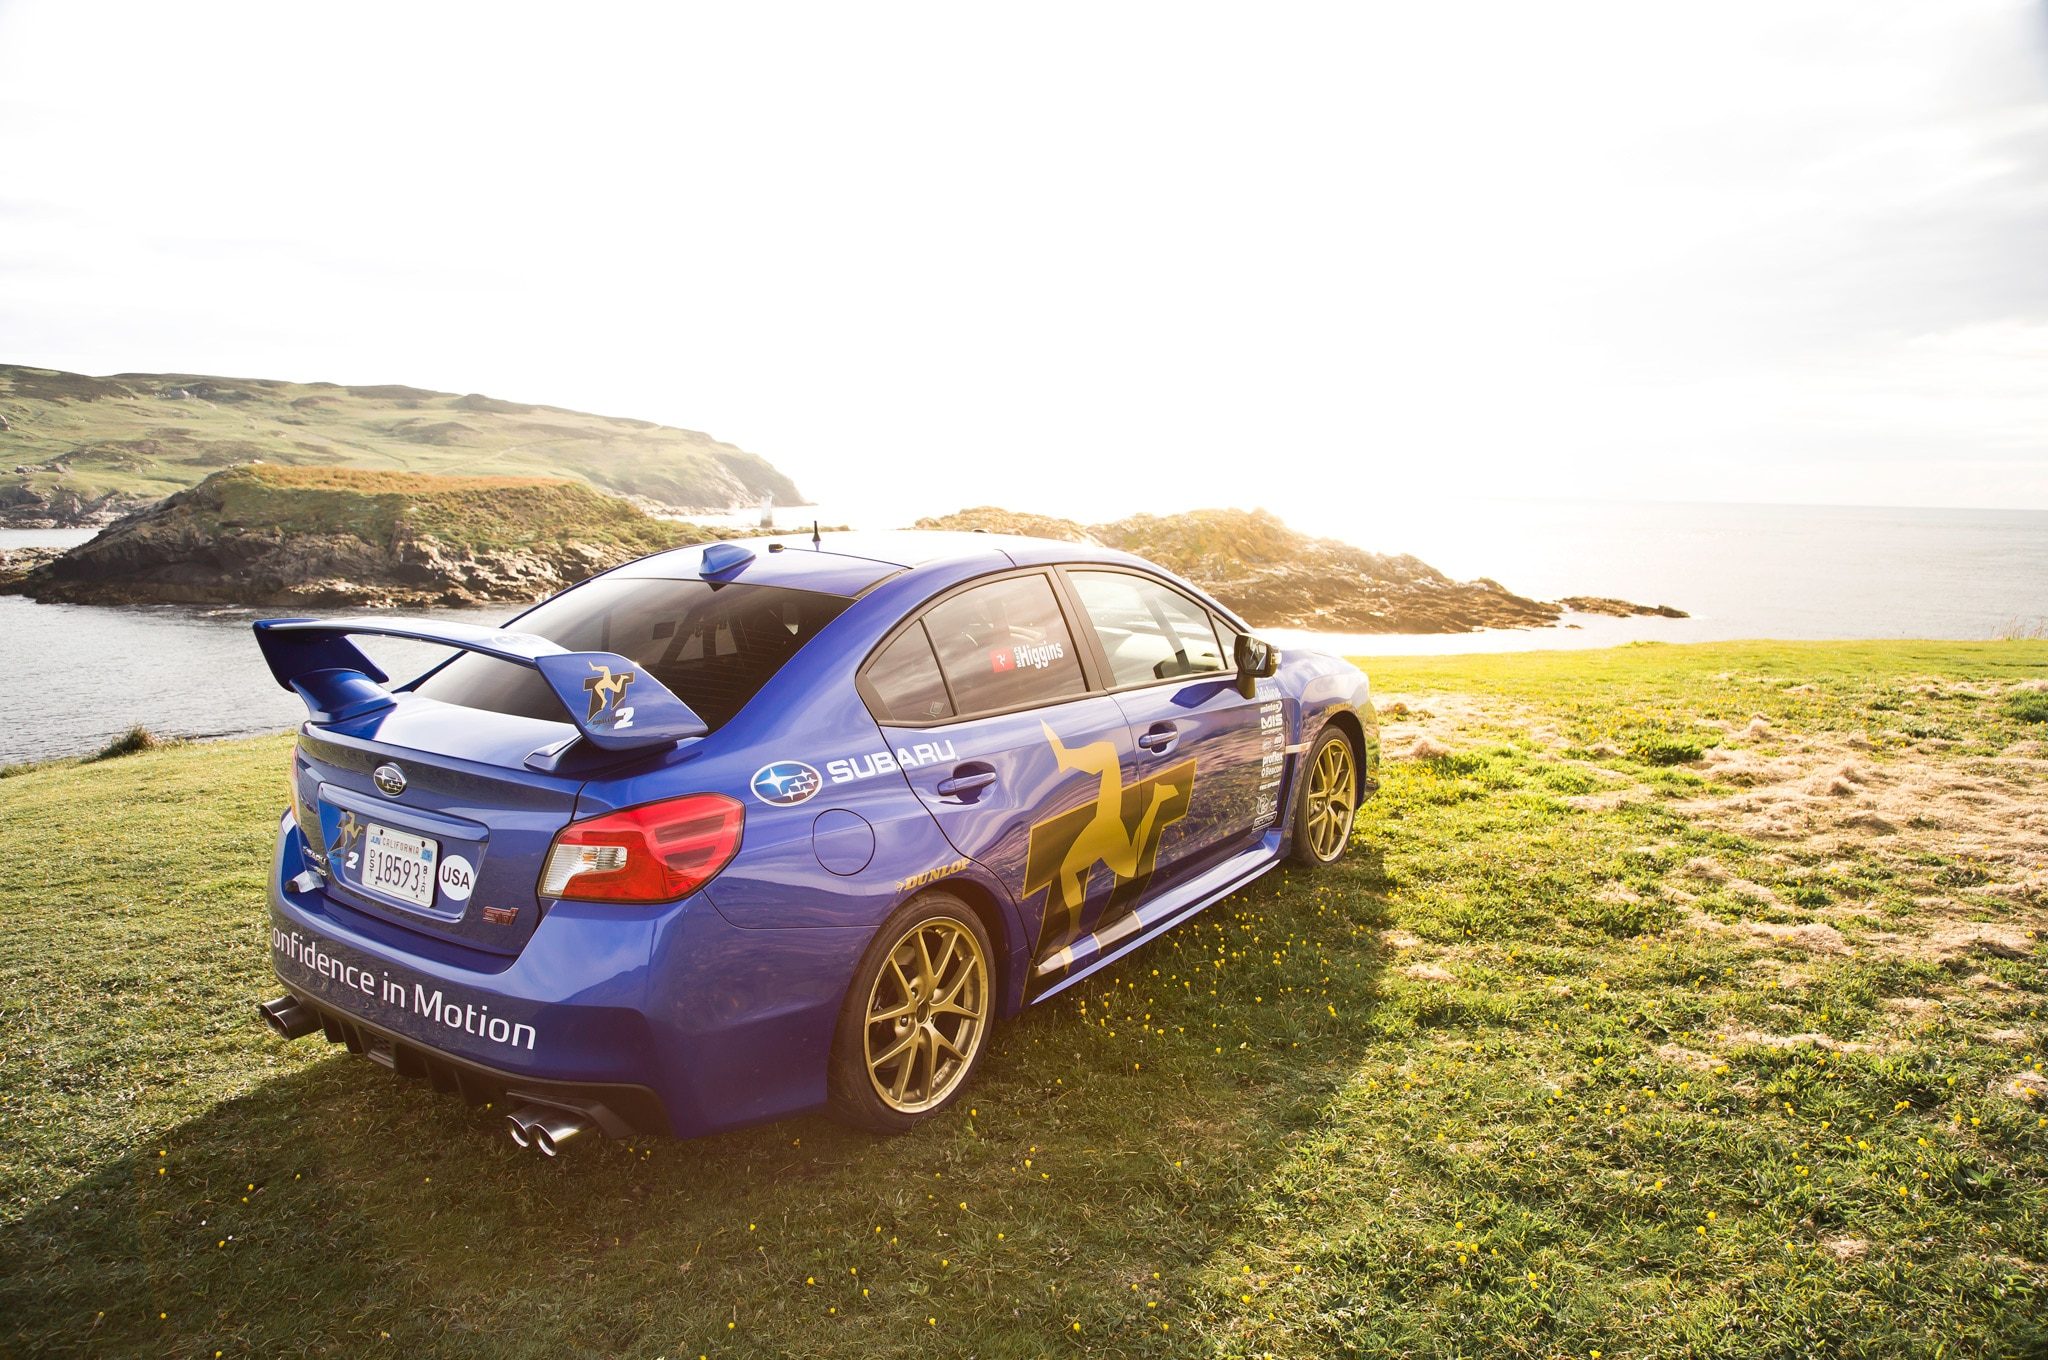 2015-Subaru-WRX-STI-at-Isle-of-Man-rear-side-view-parked.jpg